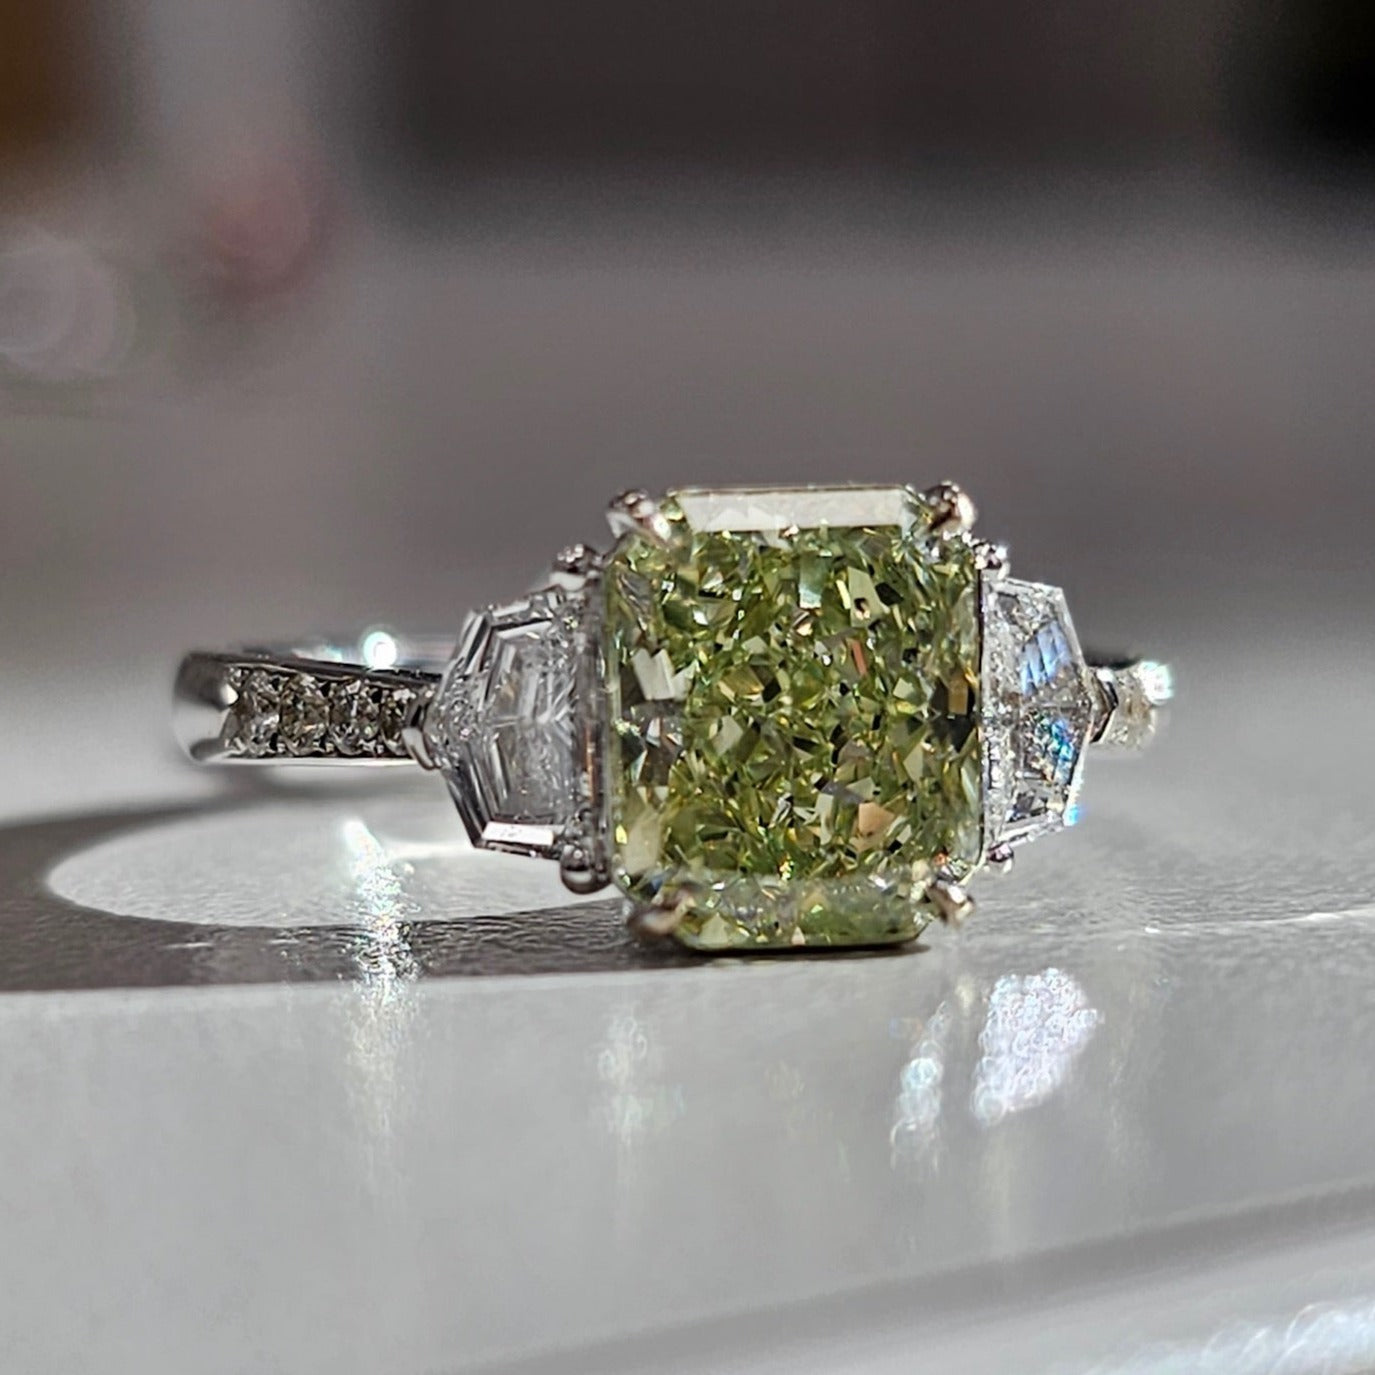 2 carat green diamond elongated radiant cut.